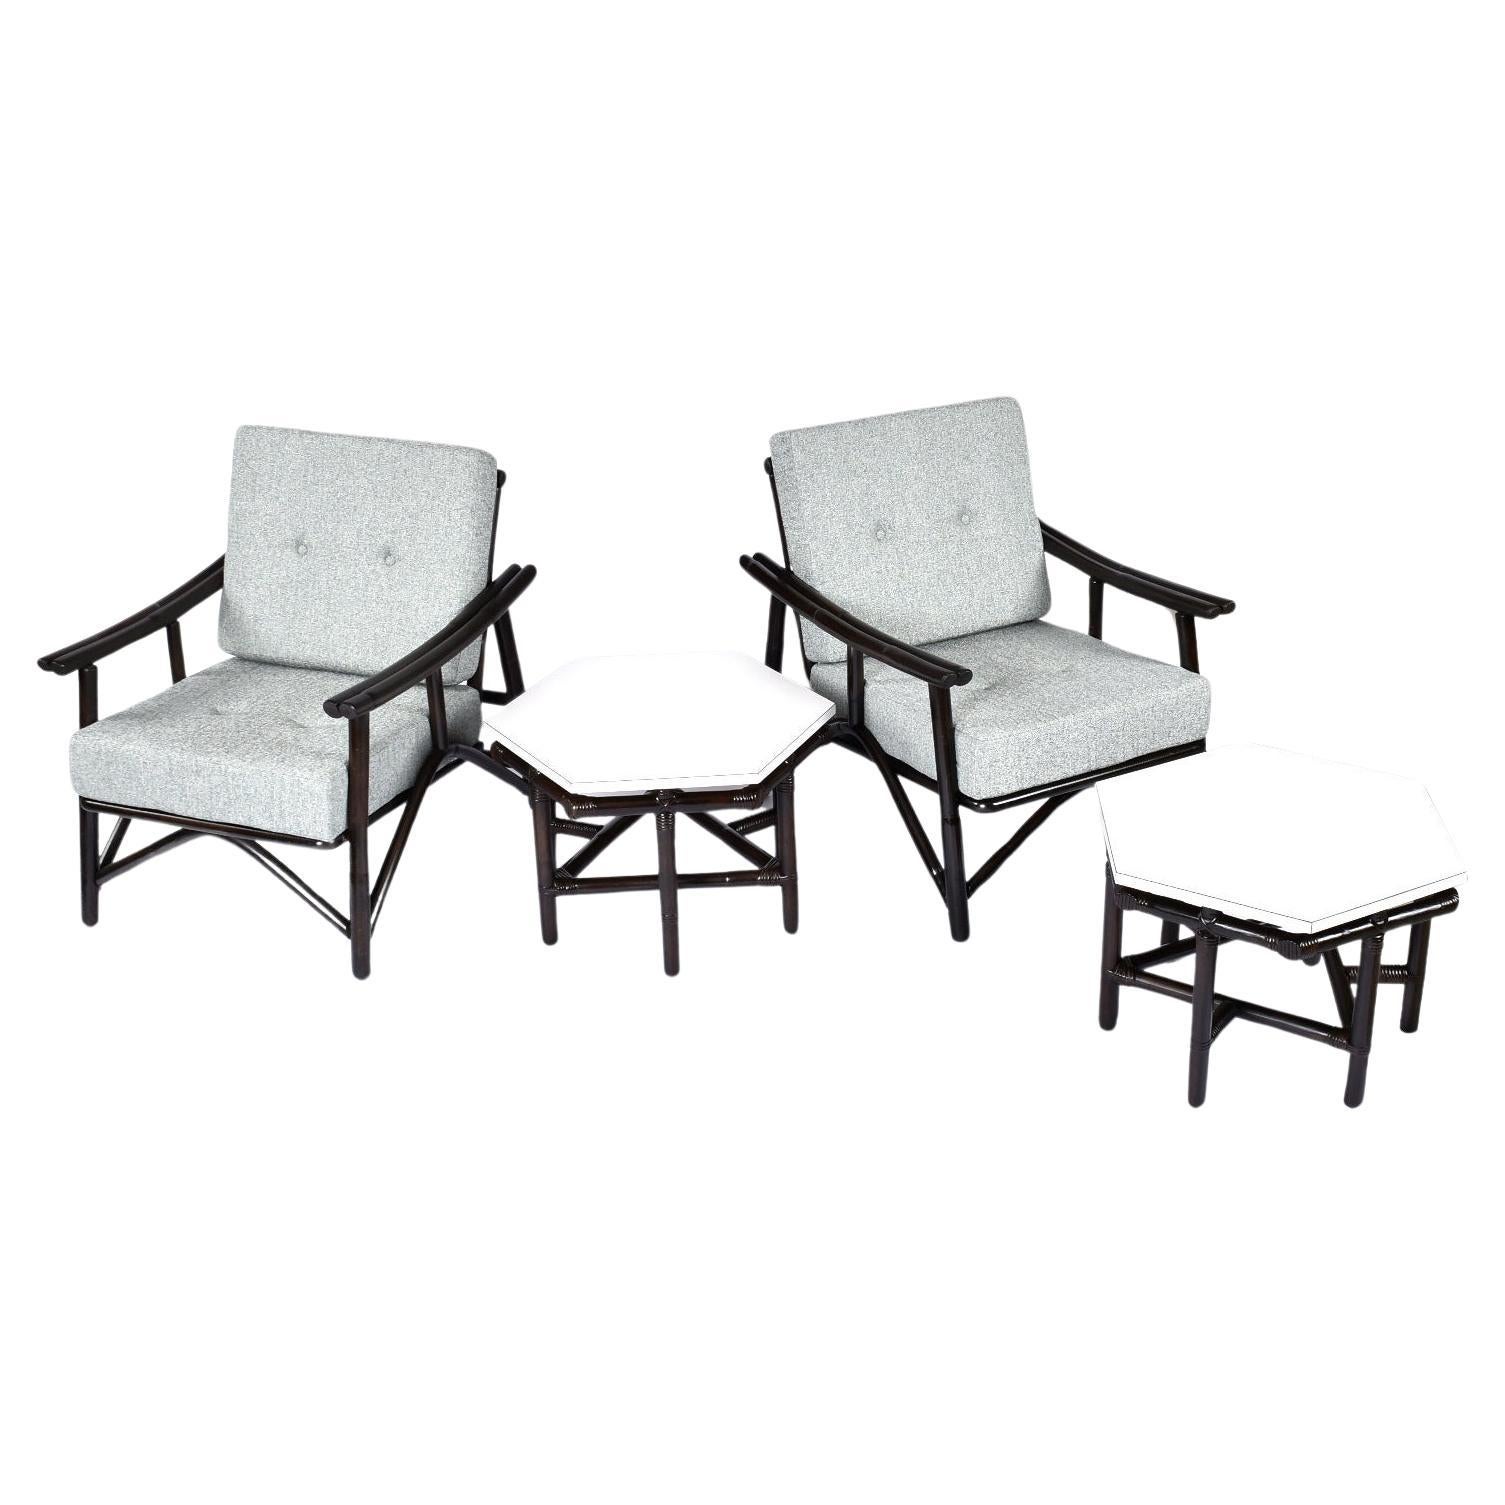 John Wisner Lounge Chairs